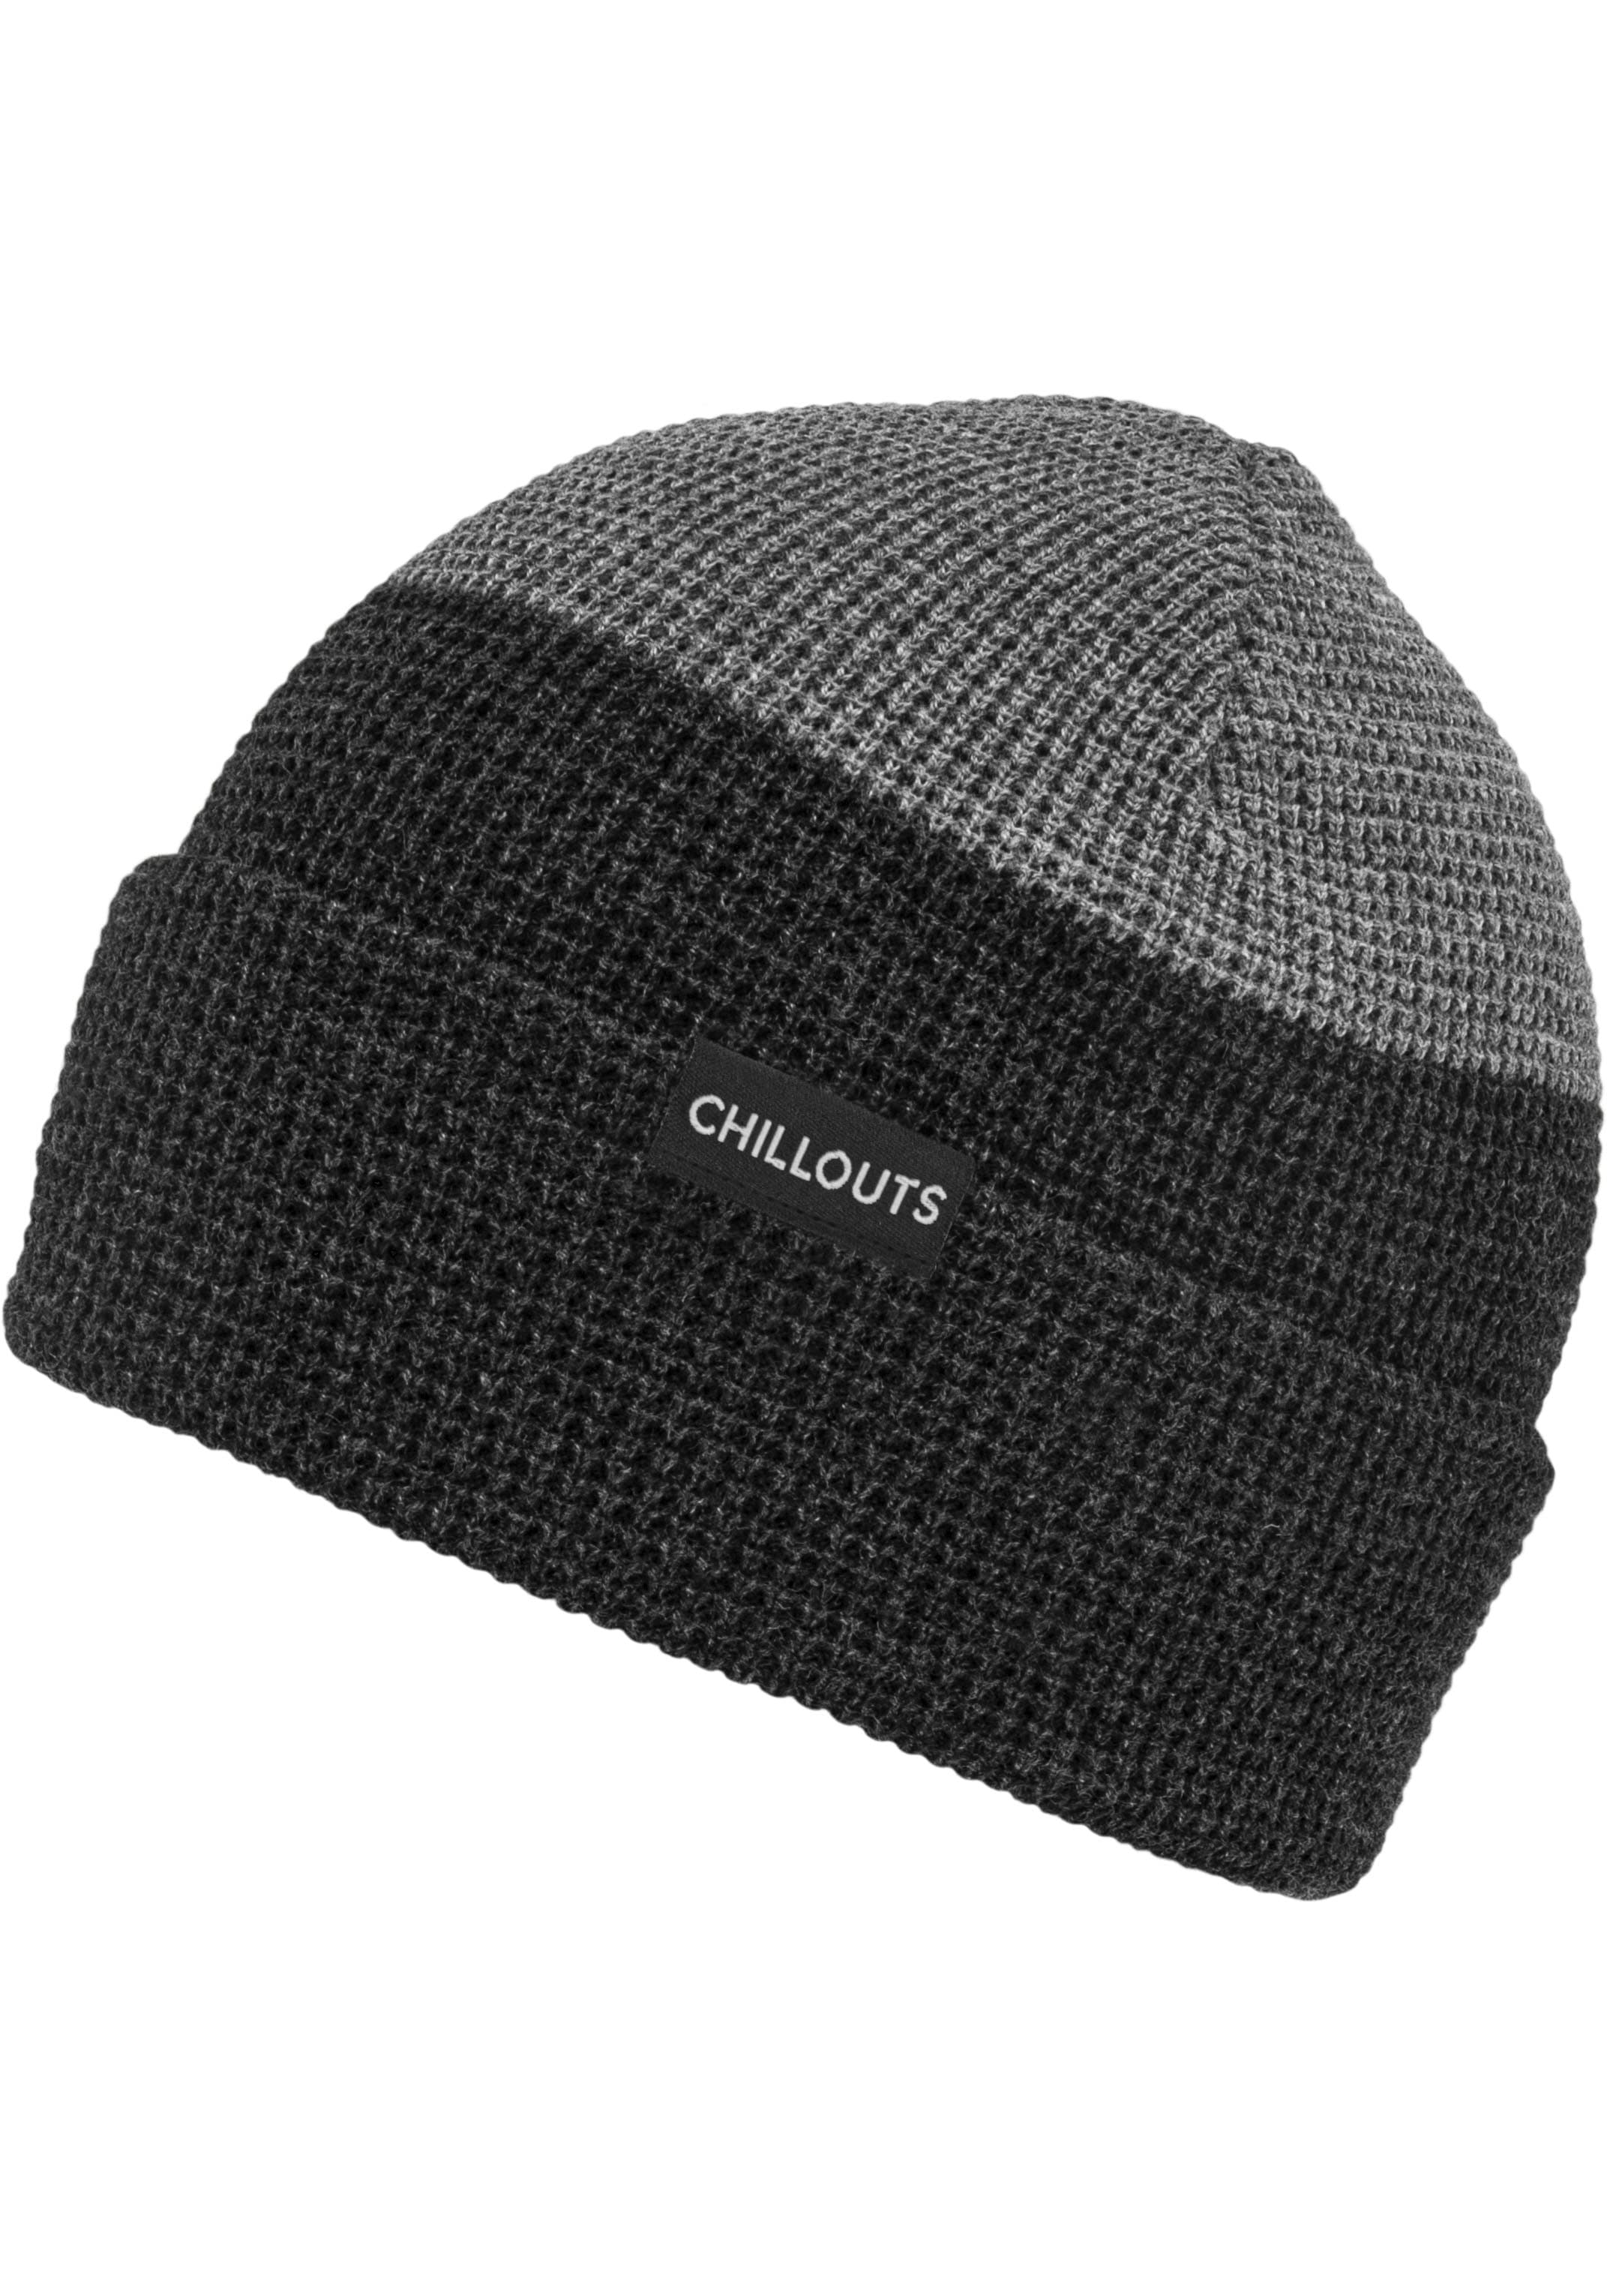 chillouts Beanie »Malou Hat«, Two Ton Optik online kaufen | BAUR